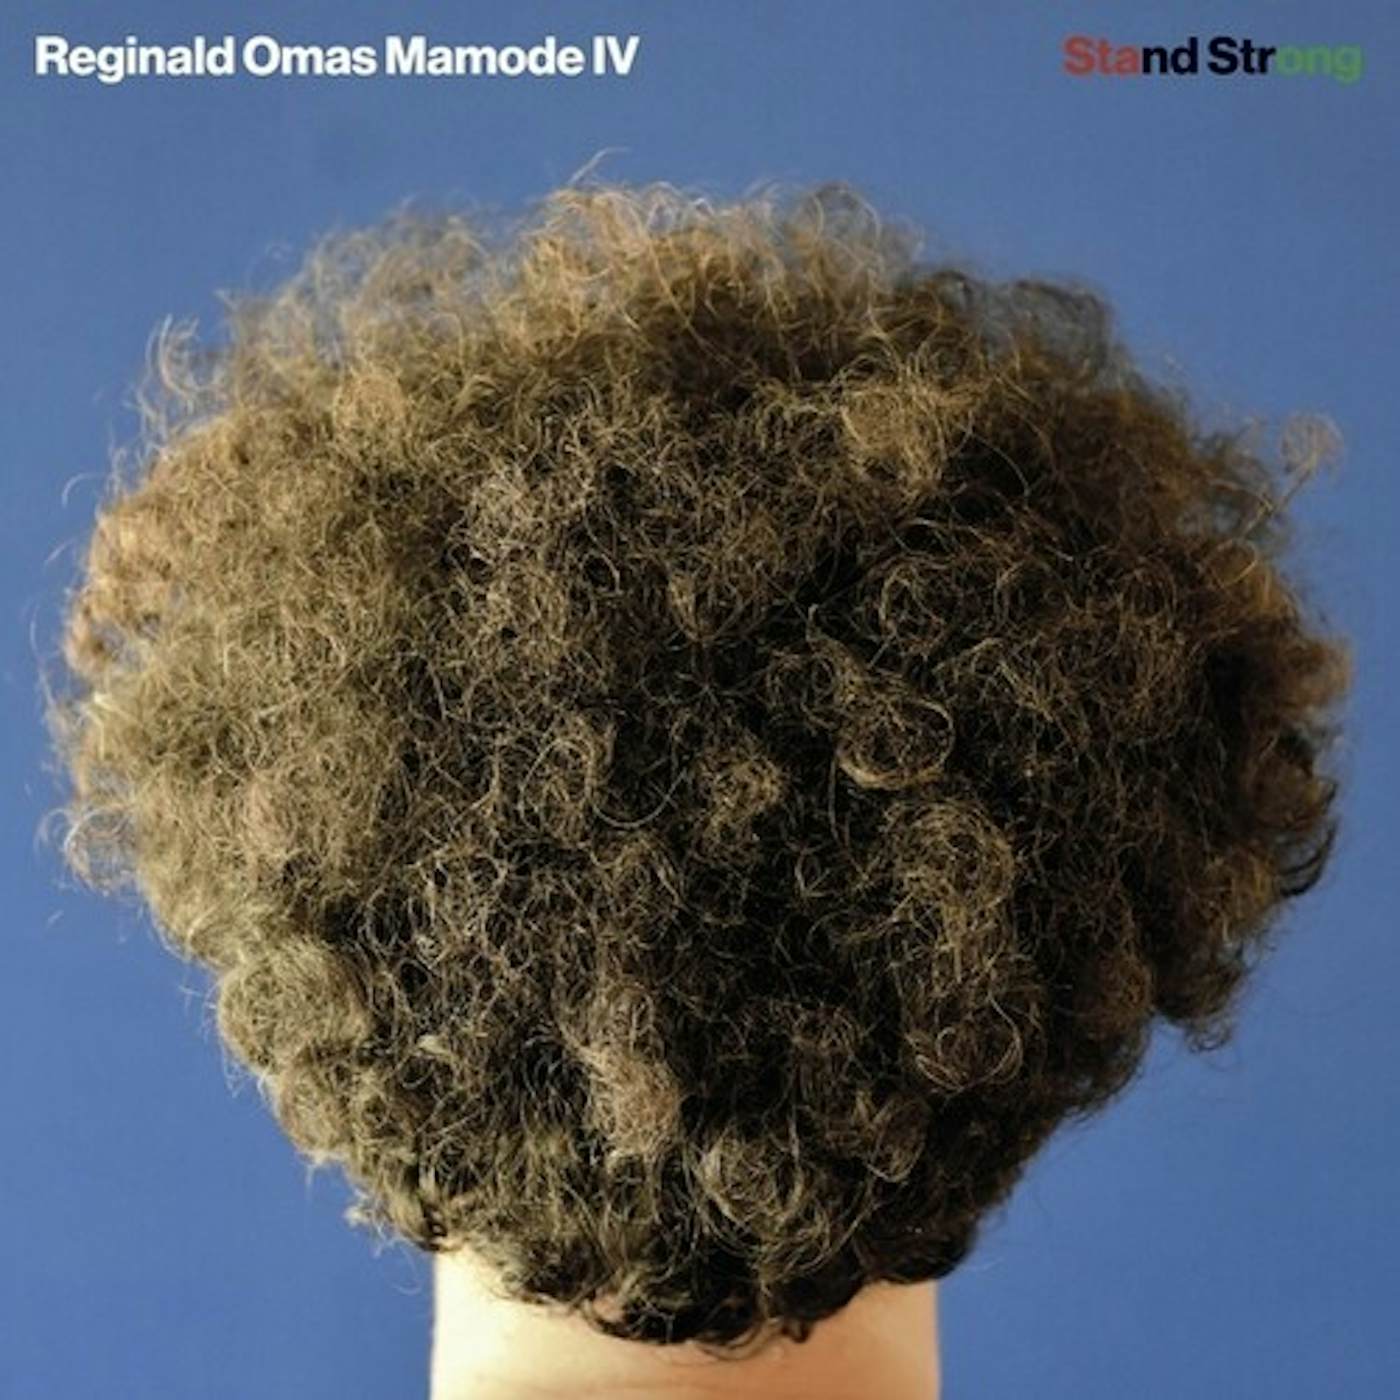 Reginald Omas Mamode IV Stand Strong Vinyl Record